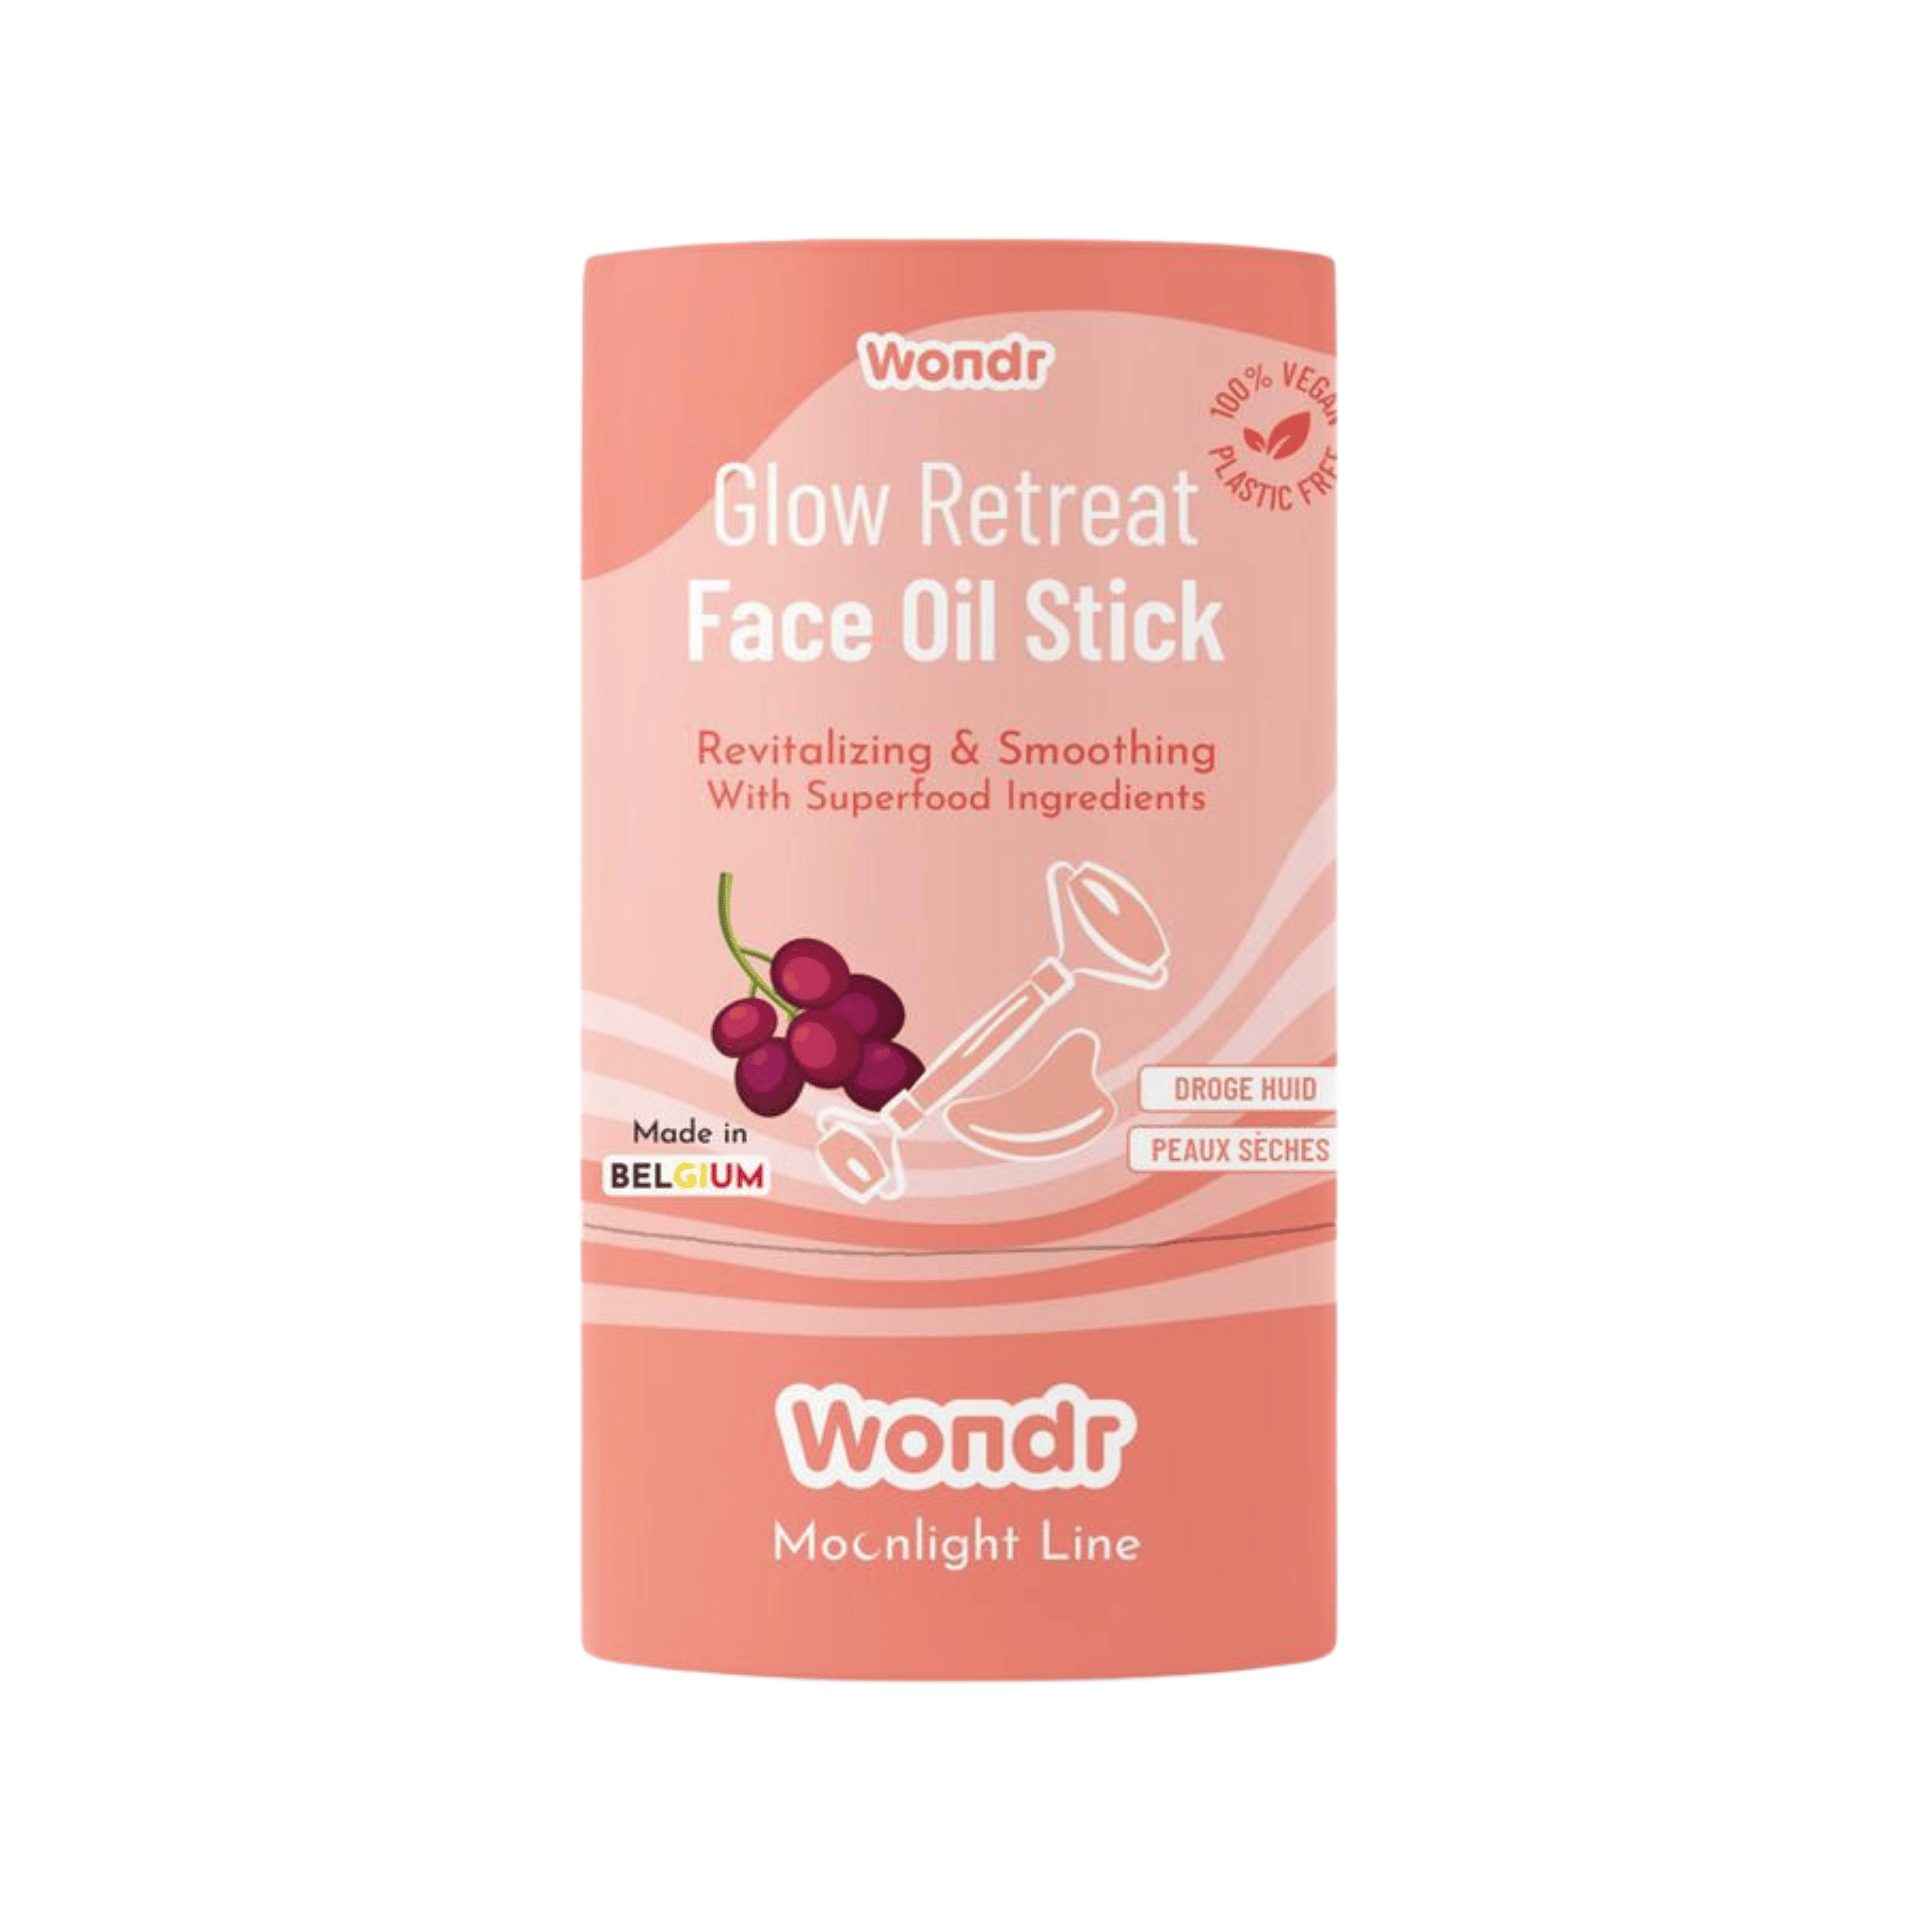 Wondr Glow Retreat Oil Stick Rev&smooth 46g